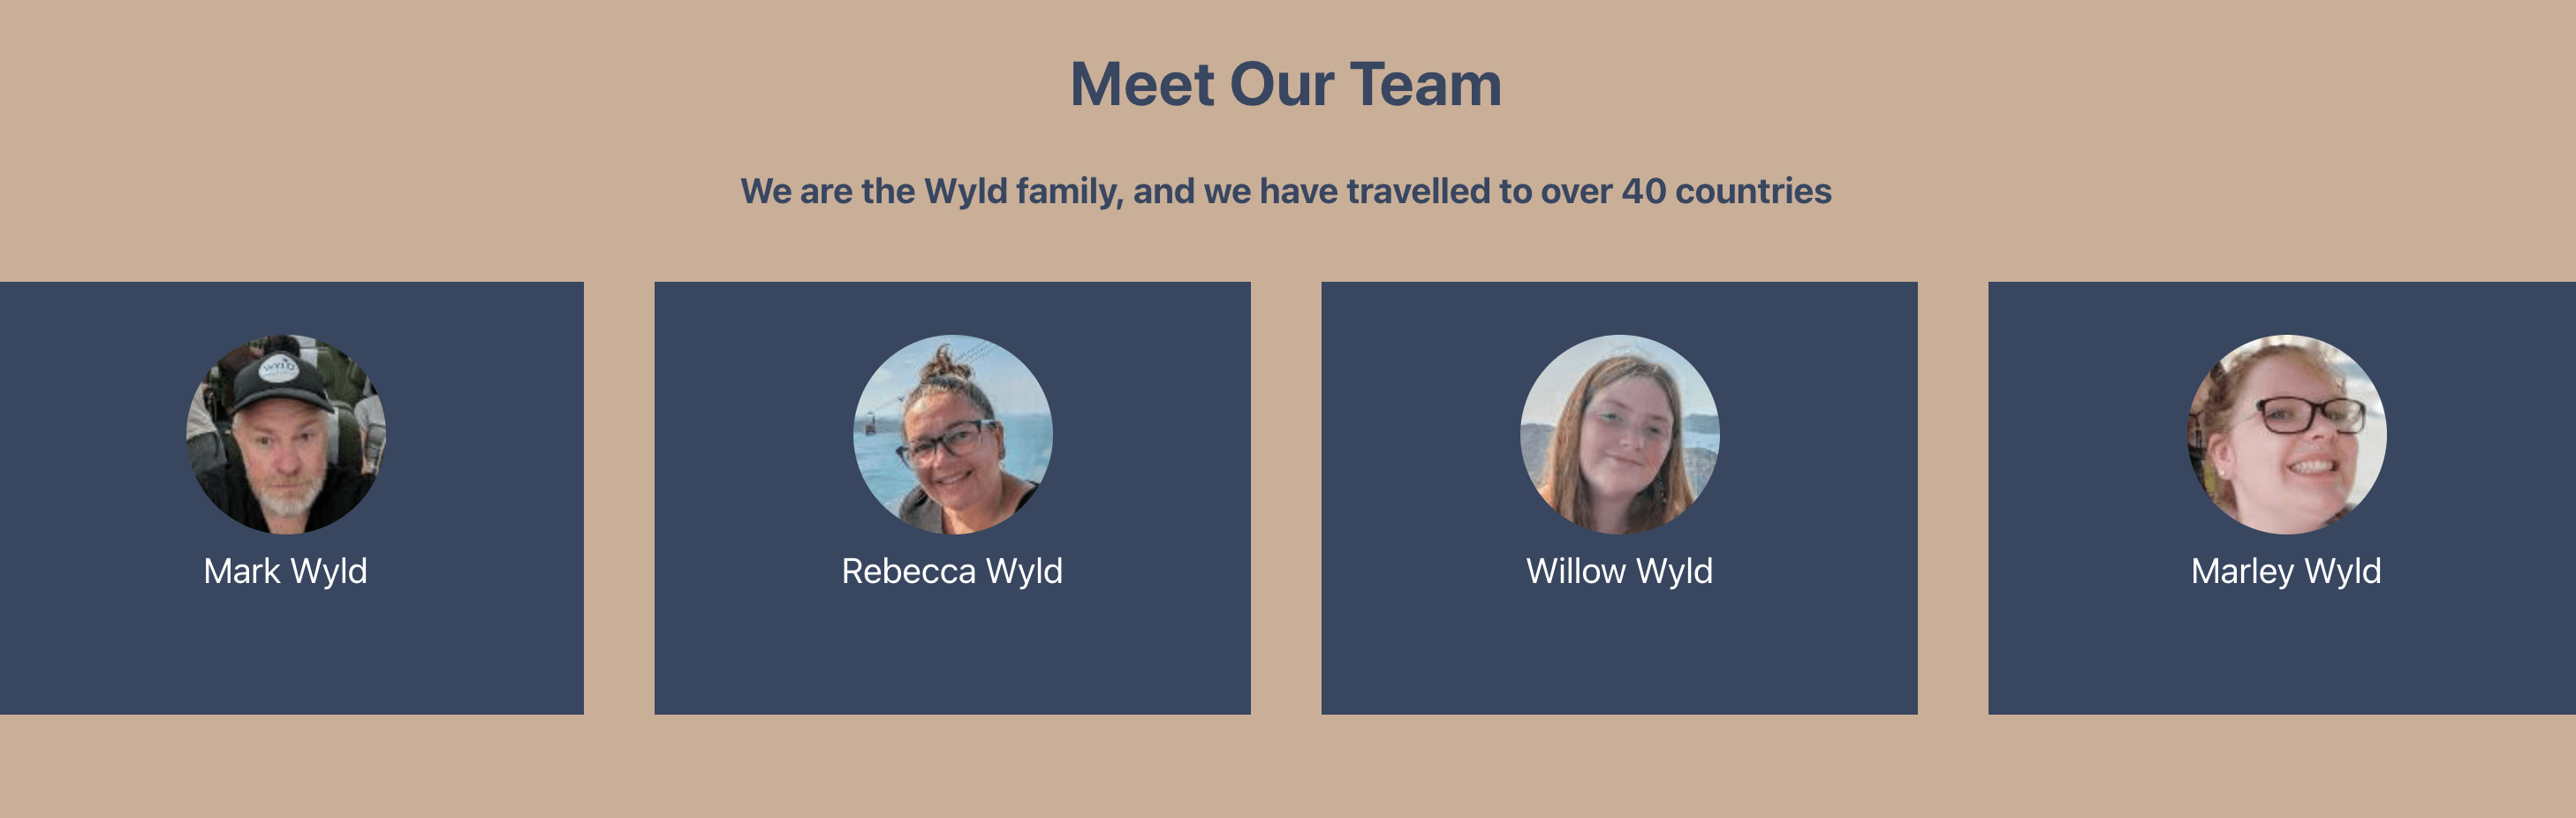 Wyld Family Travel team